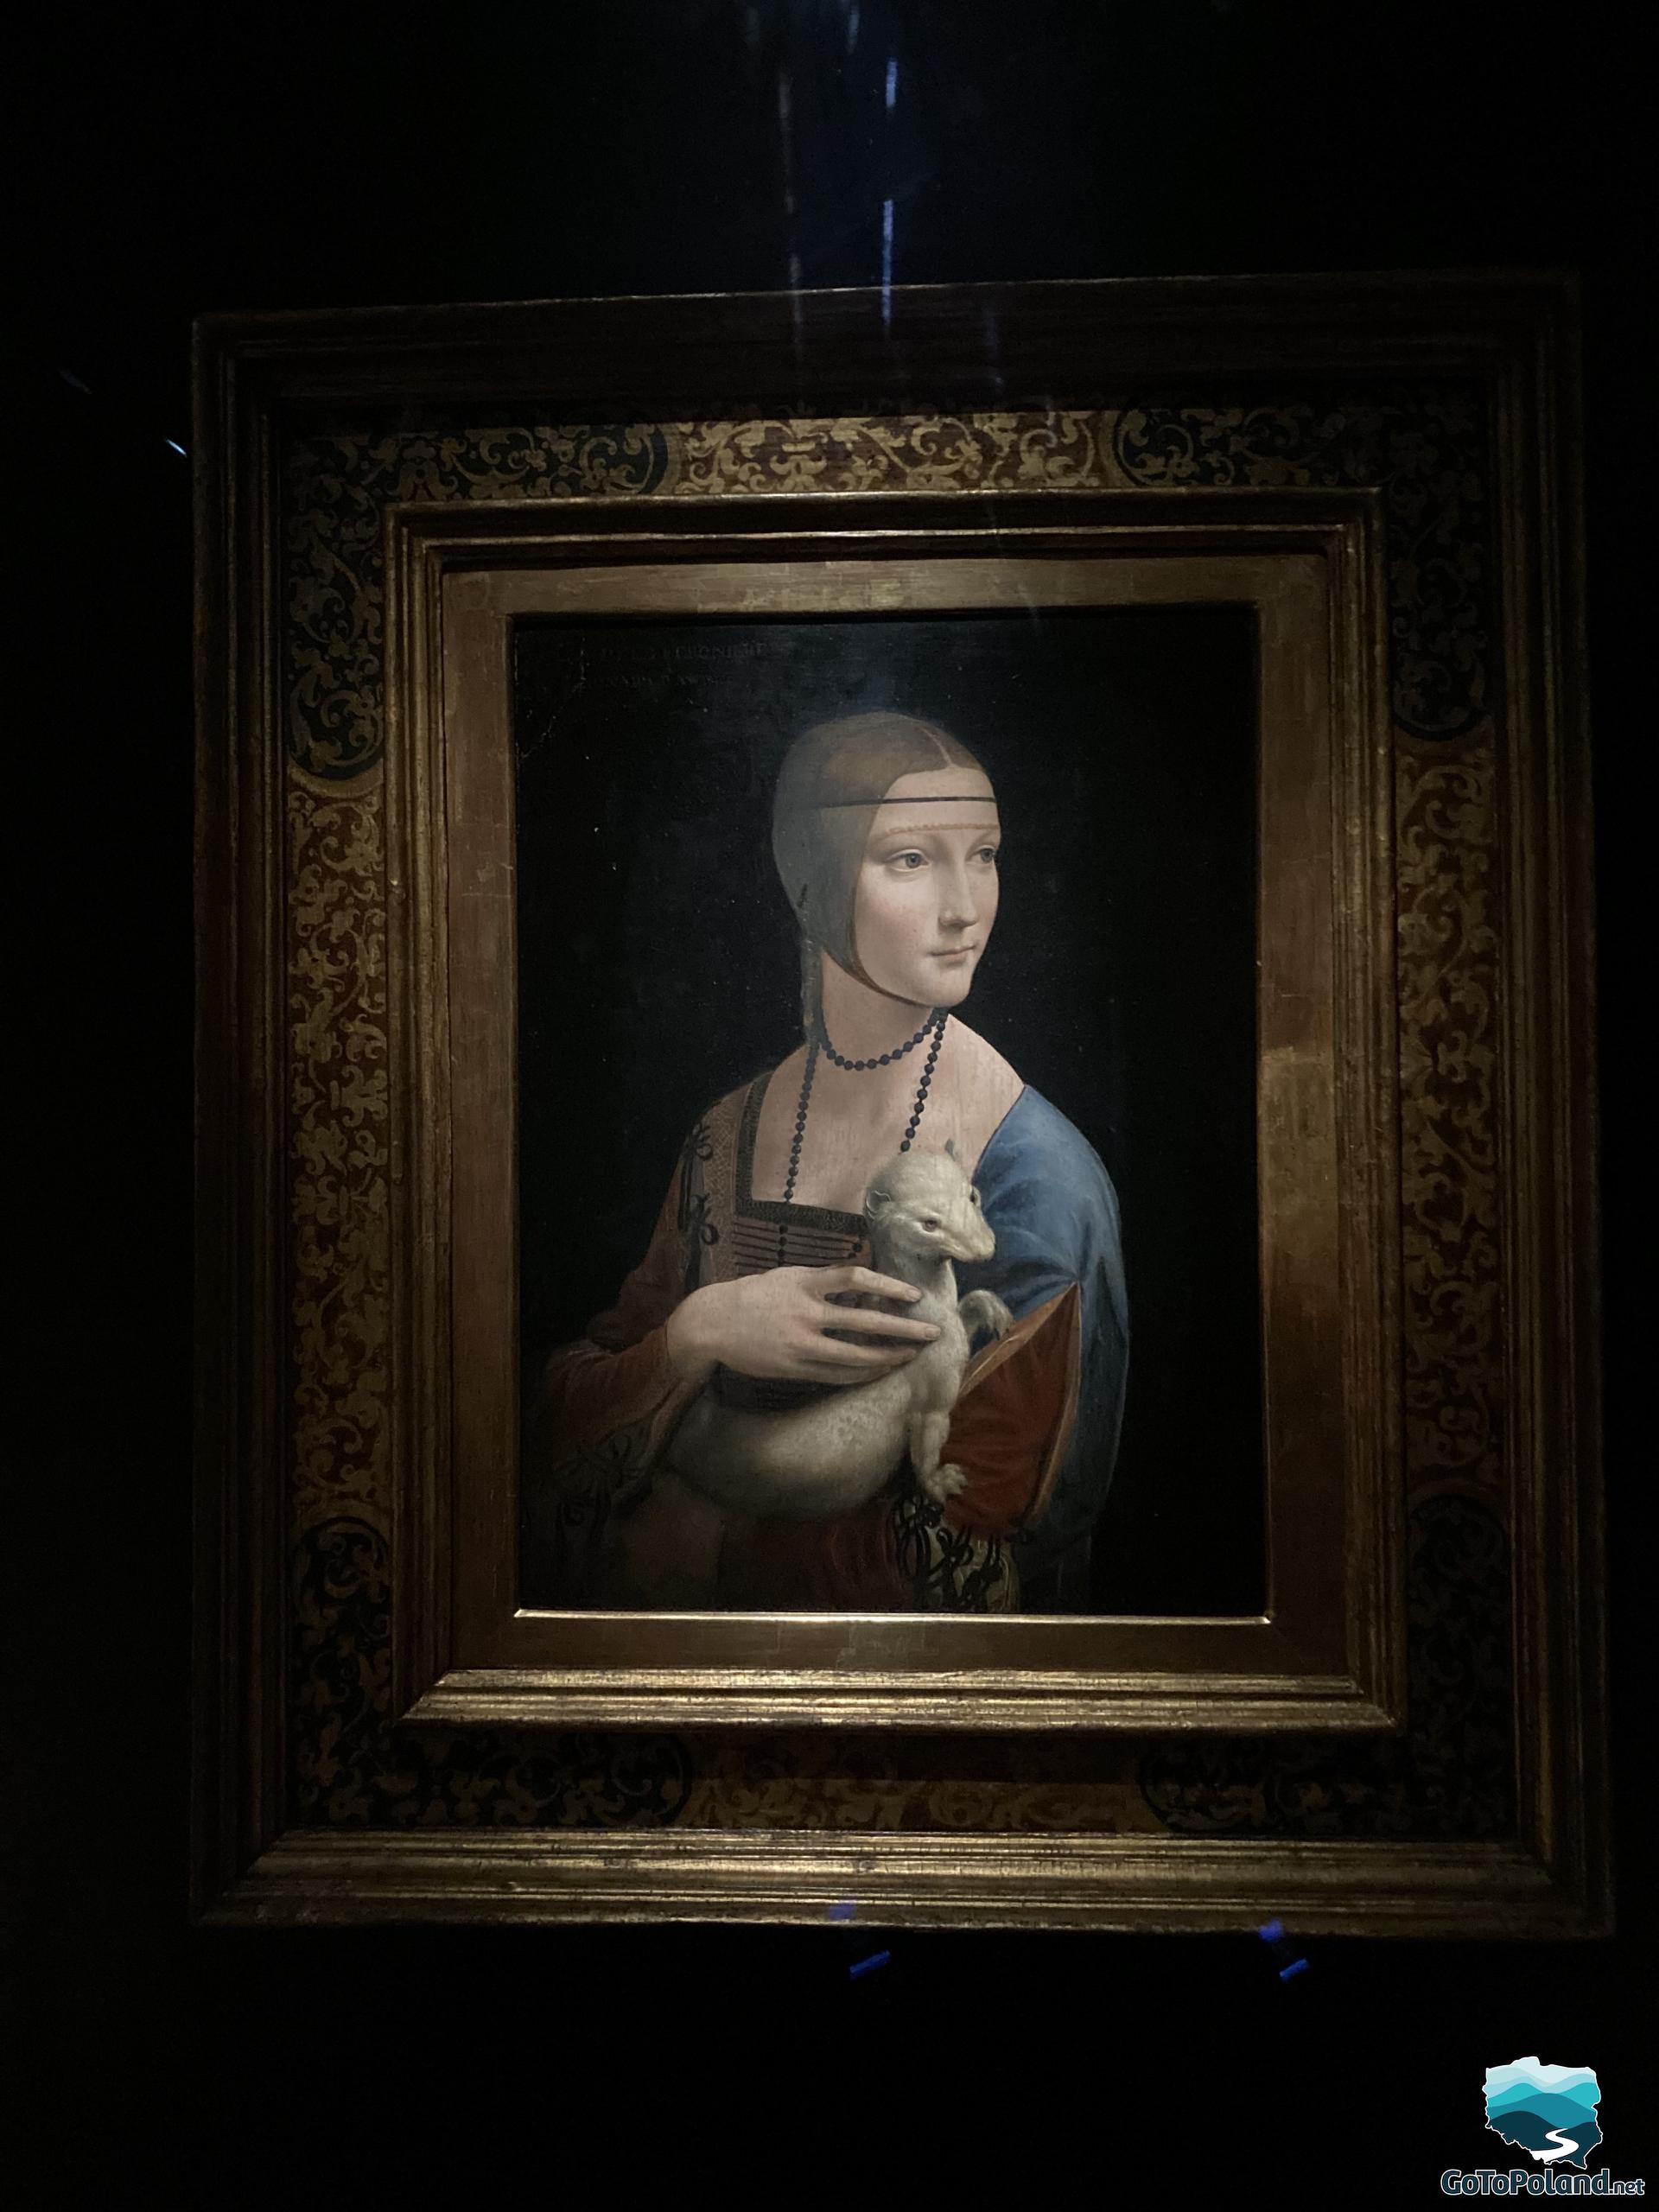 The painting Lady with an Ermine by Leonardo da Vinci